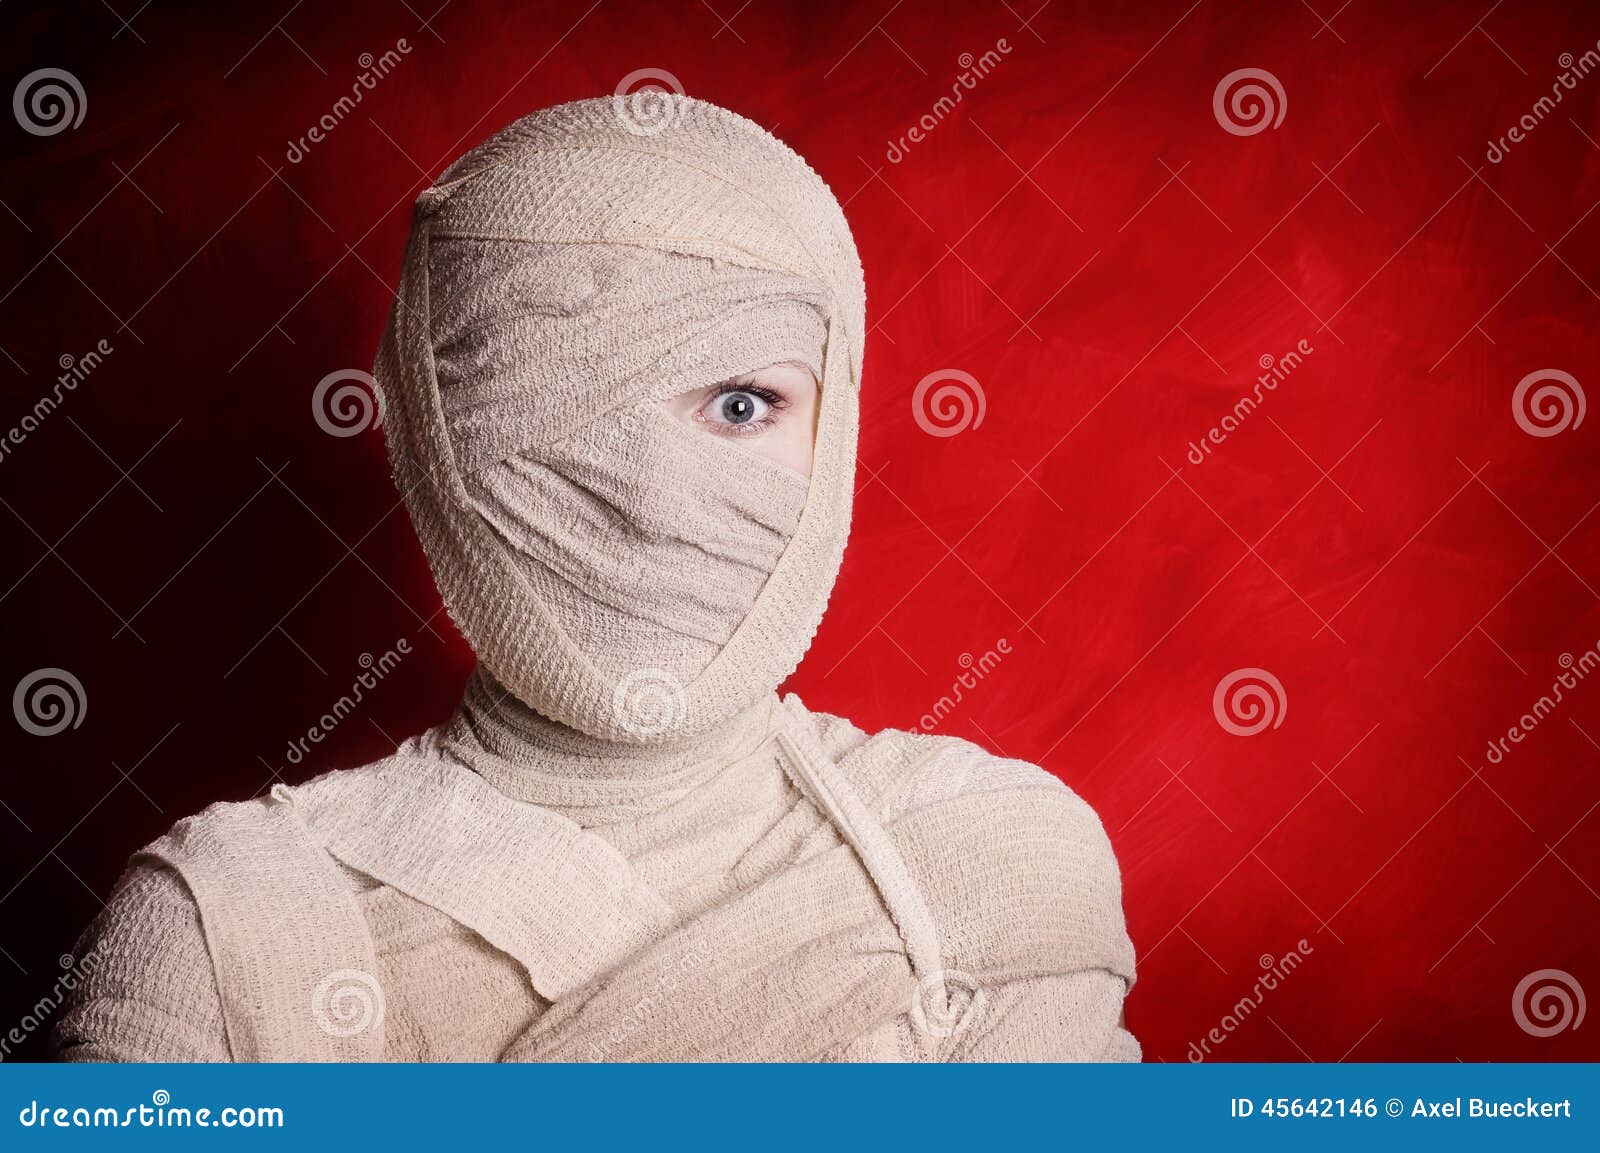 mummy halloween costume